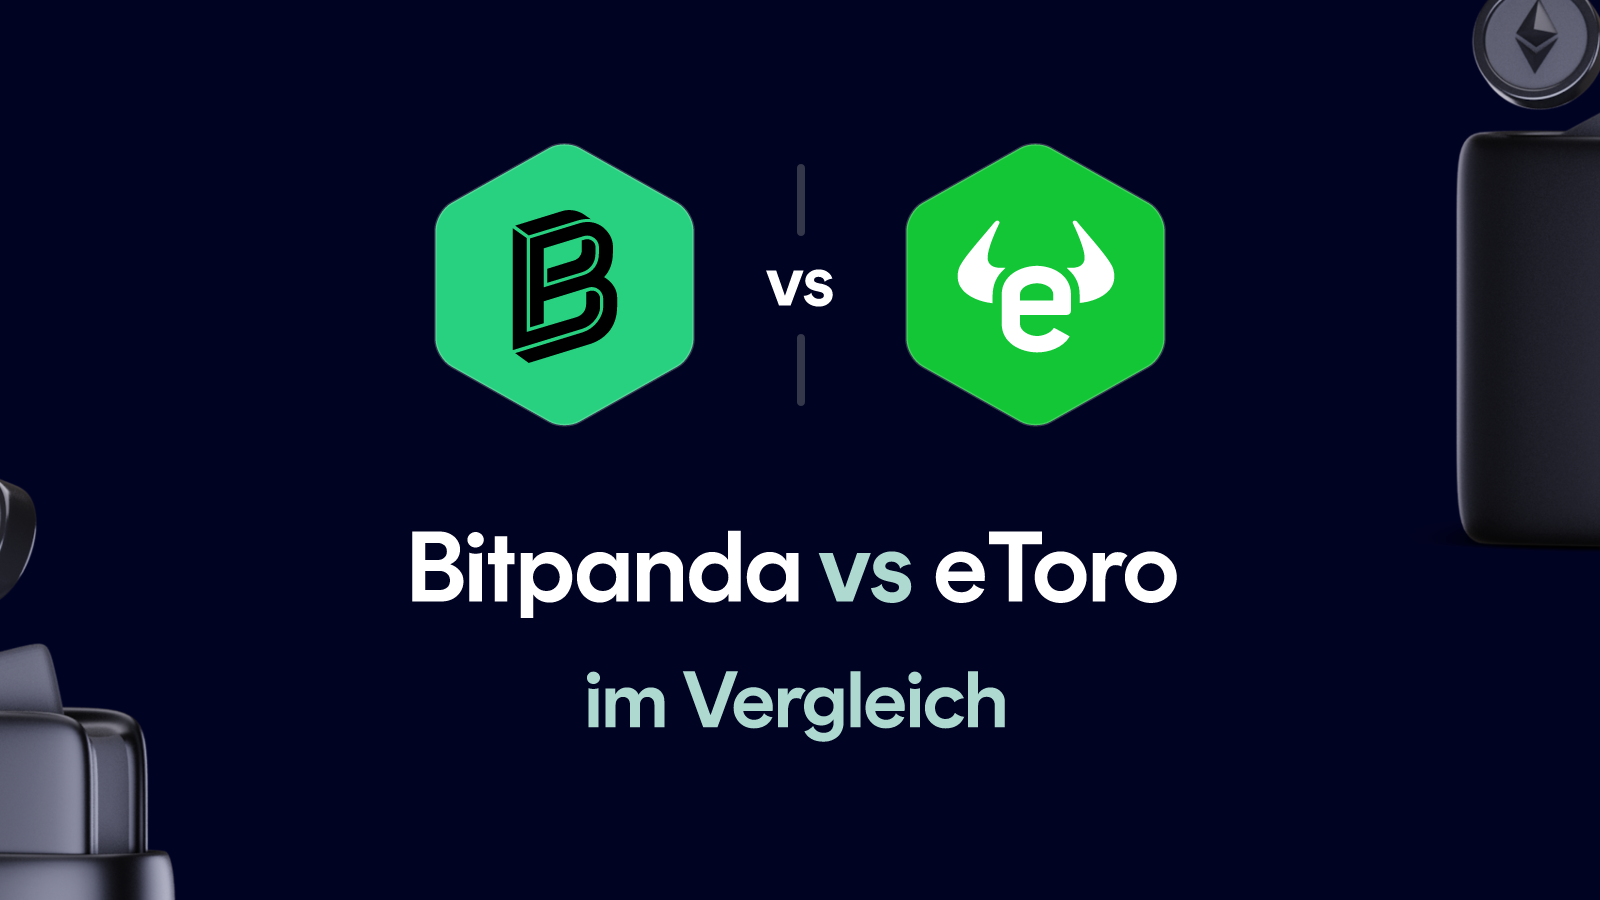 Bitpanda vs eToro im Vergleich